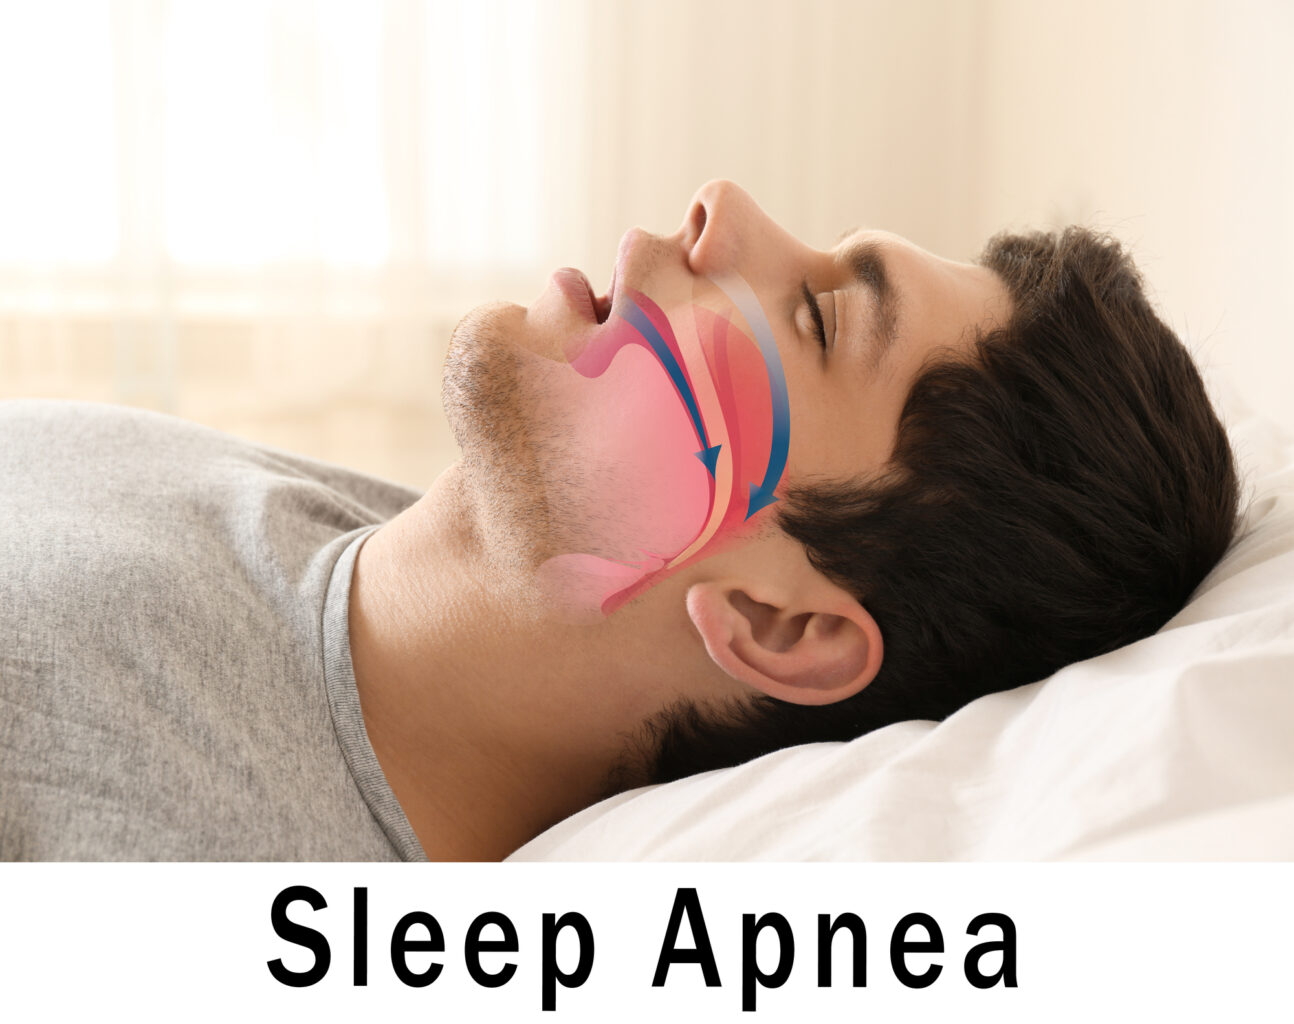 man with sleep apnea diagram drawn on face